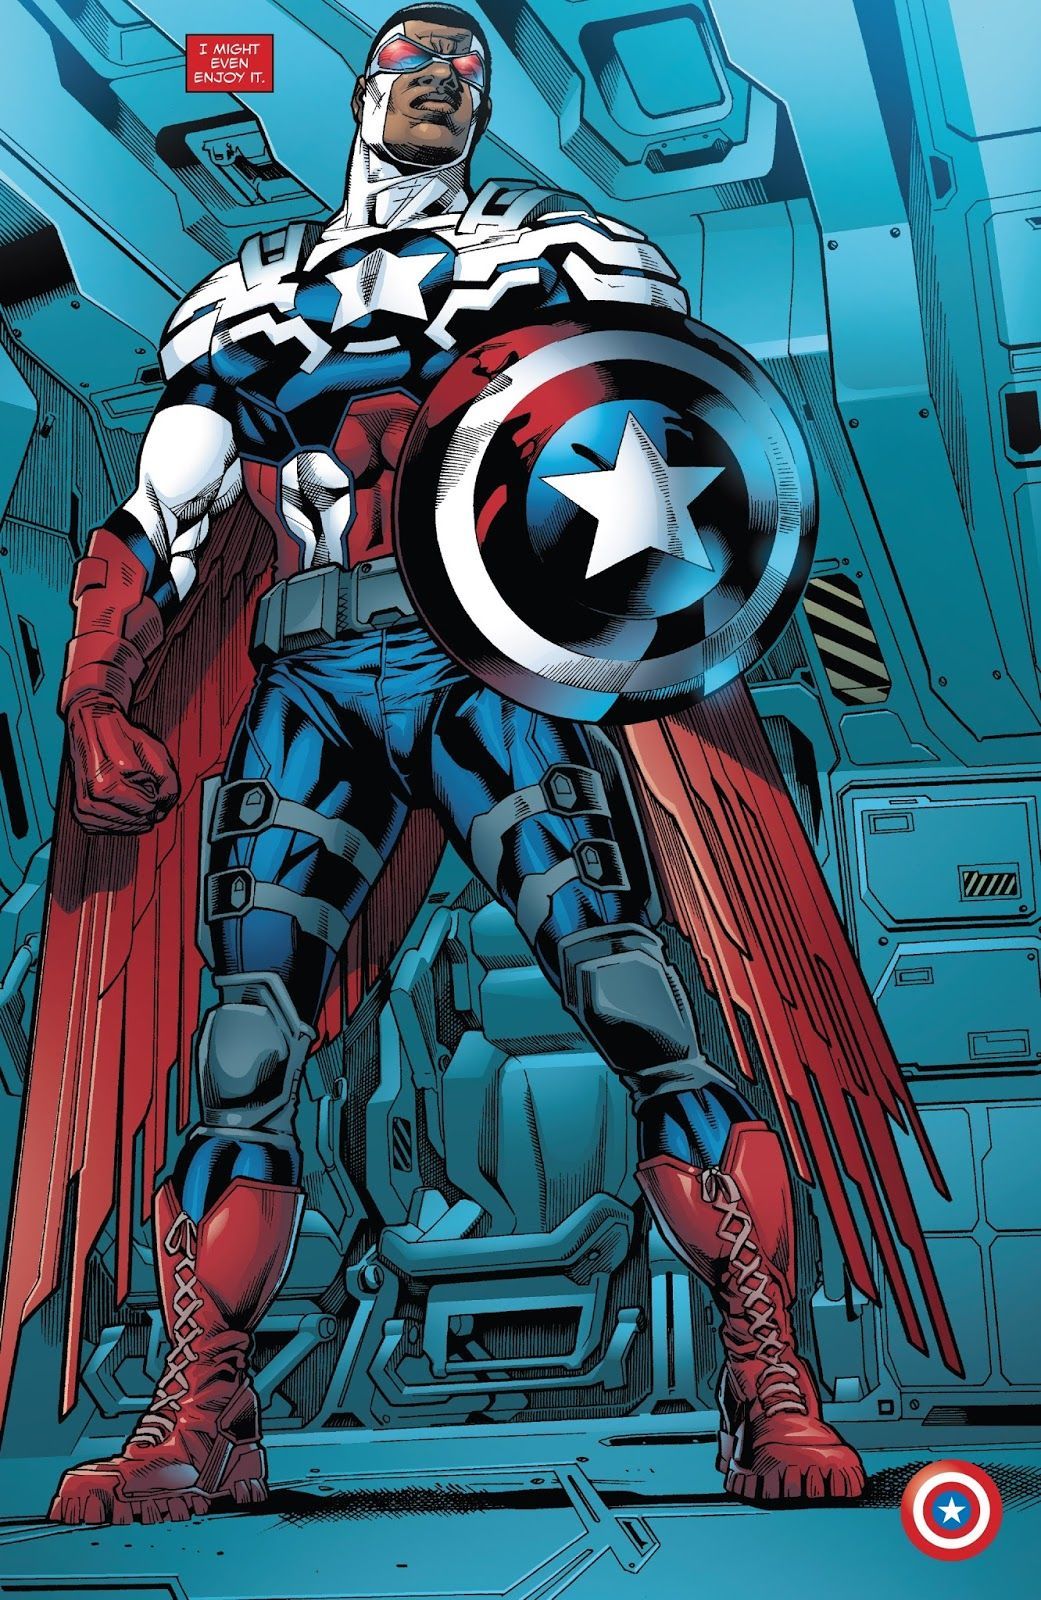 Captain America: Sam Wilson Issue Captain America: Sam Wilson Issue comic online in hi. Falcon marvel, Captain america art, Marvel comics wallpaper